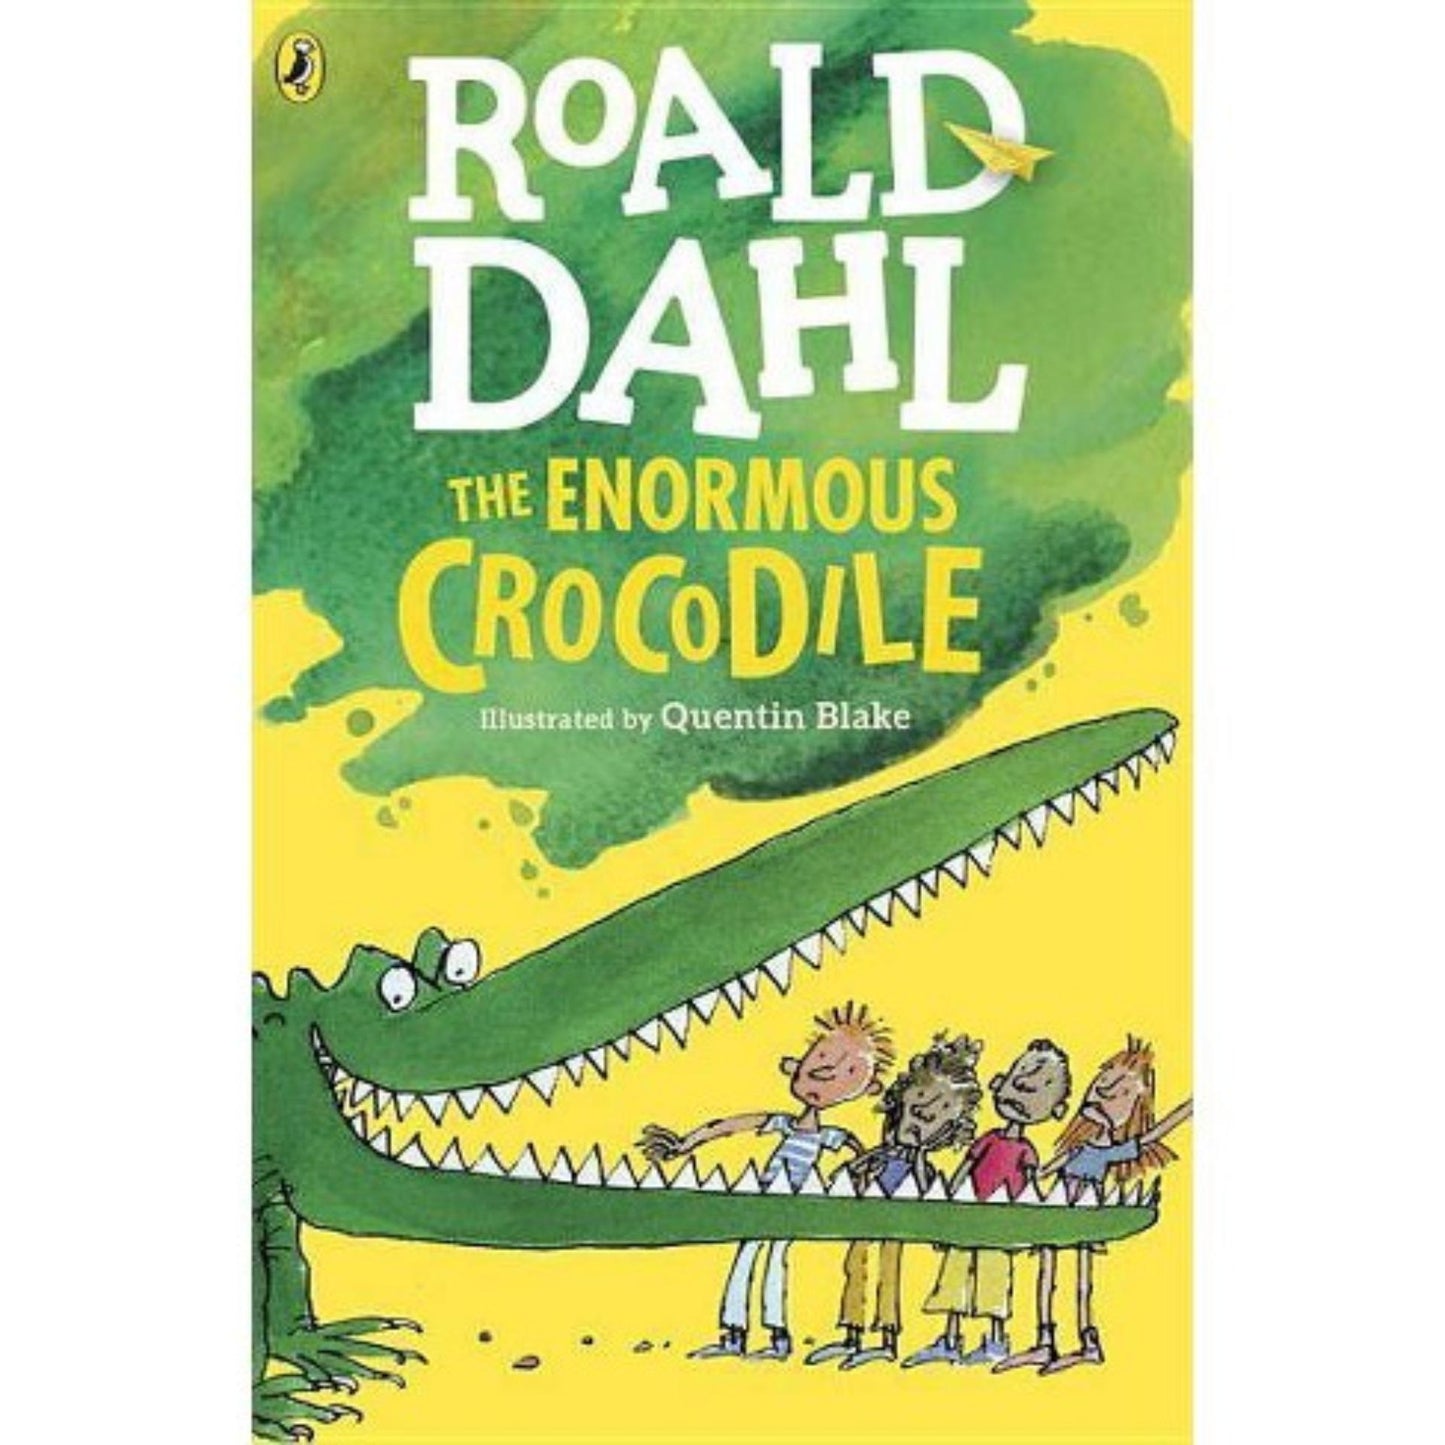 The Enormous Crocodile by Roald Dahl - Book A Book